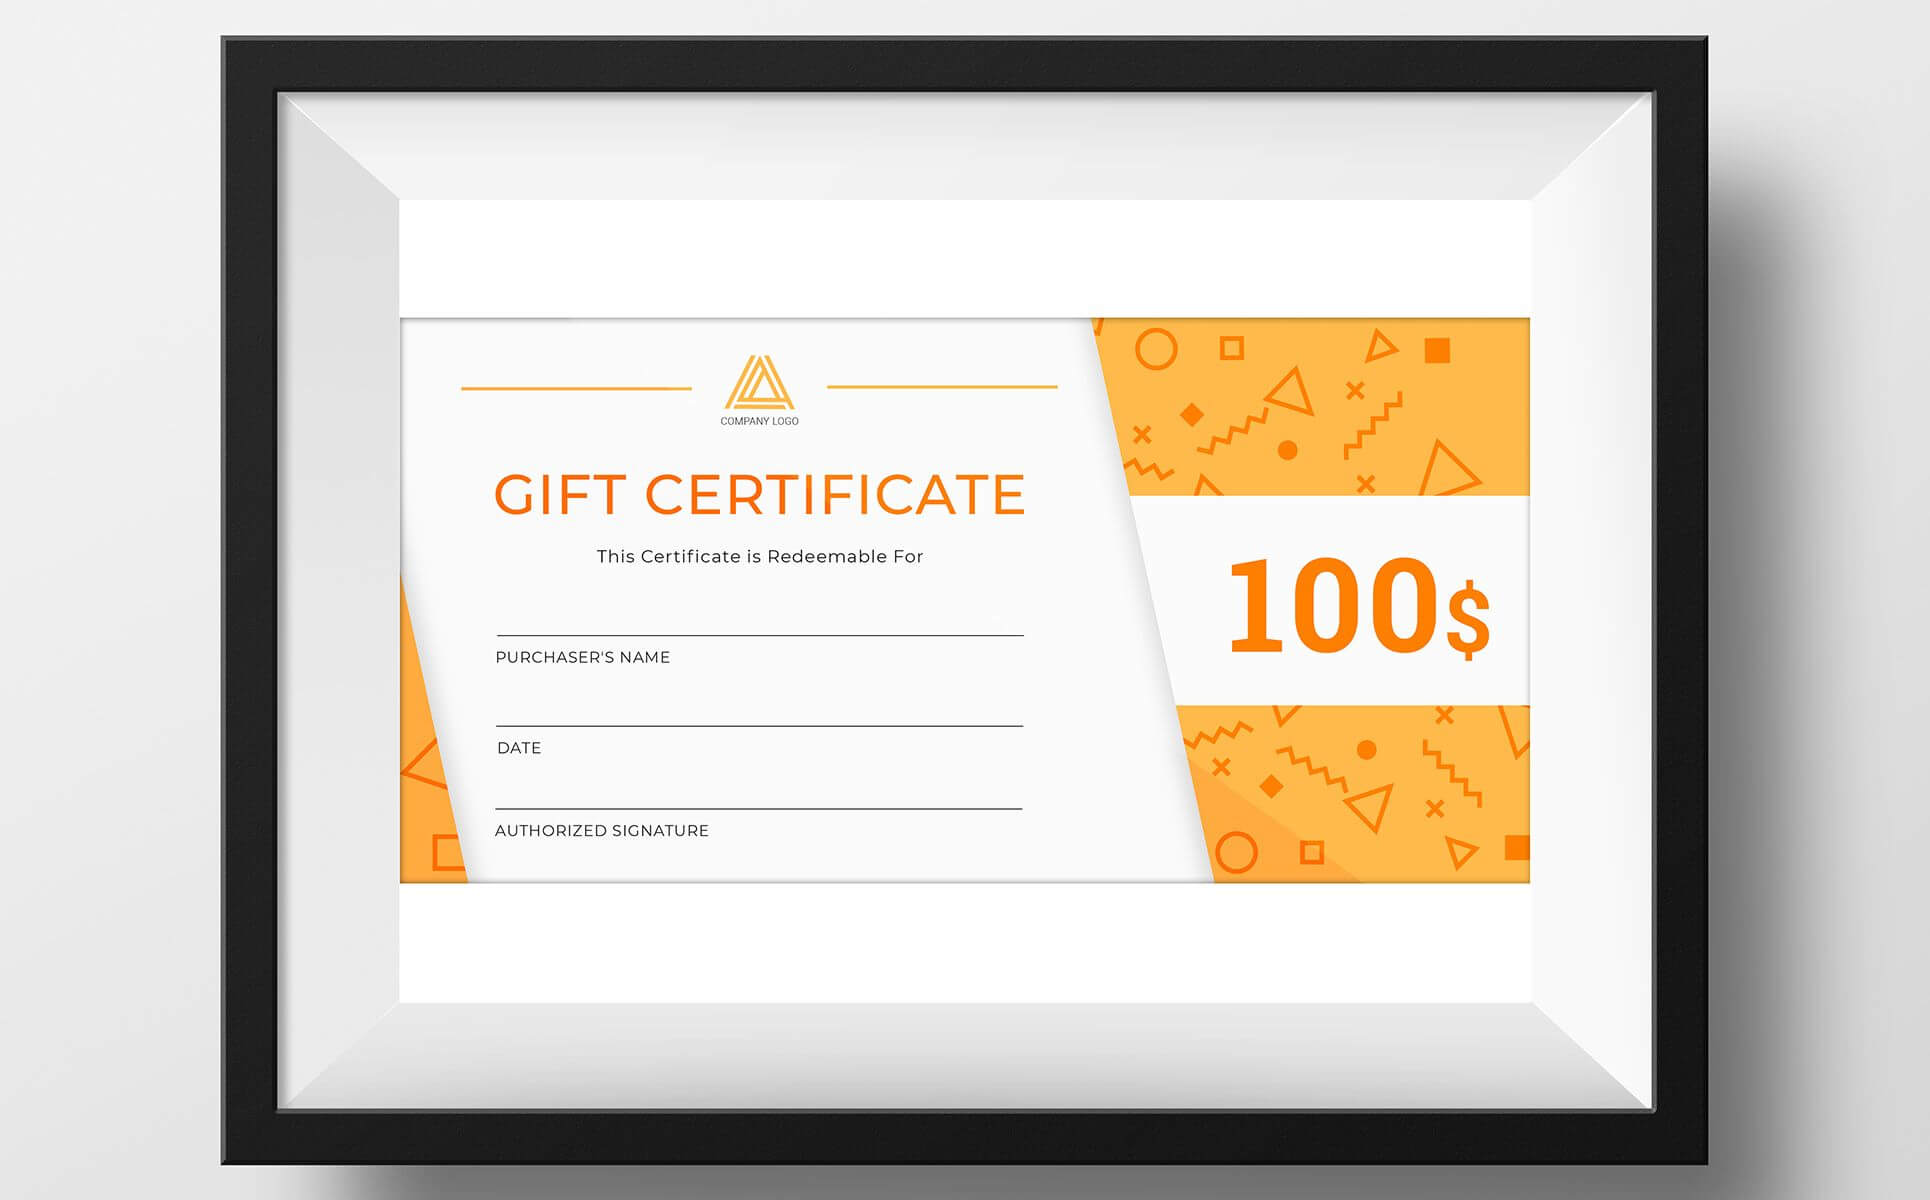 Gift Certificate Template | Design Illustration Art With Company Gift Certificate Template